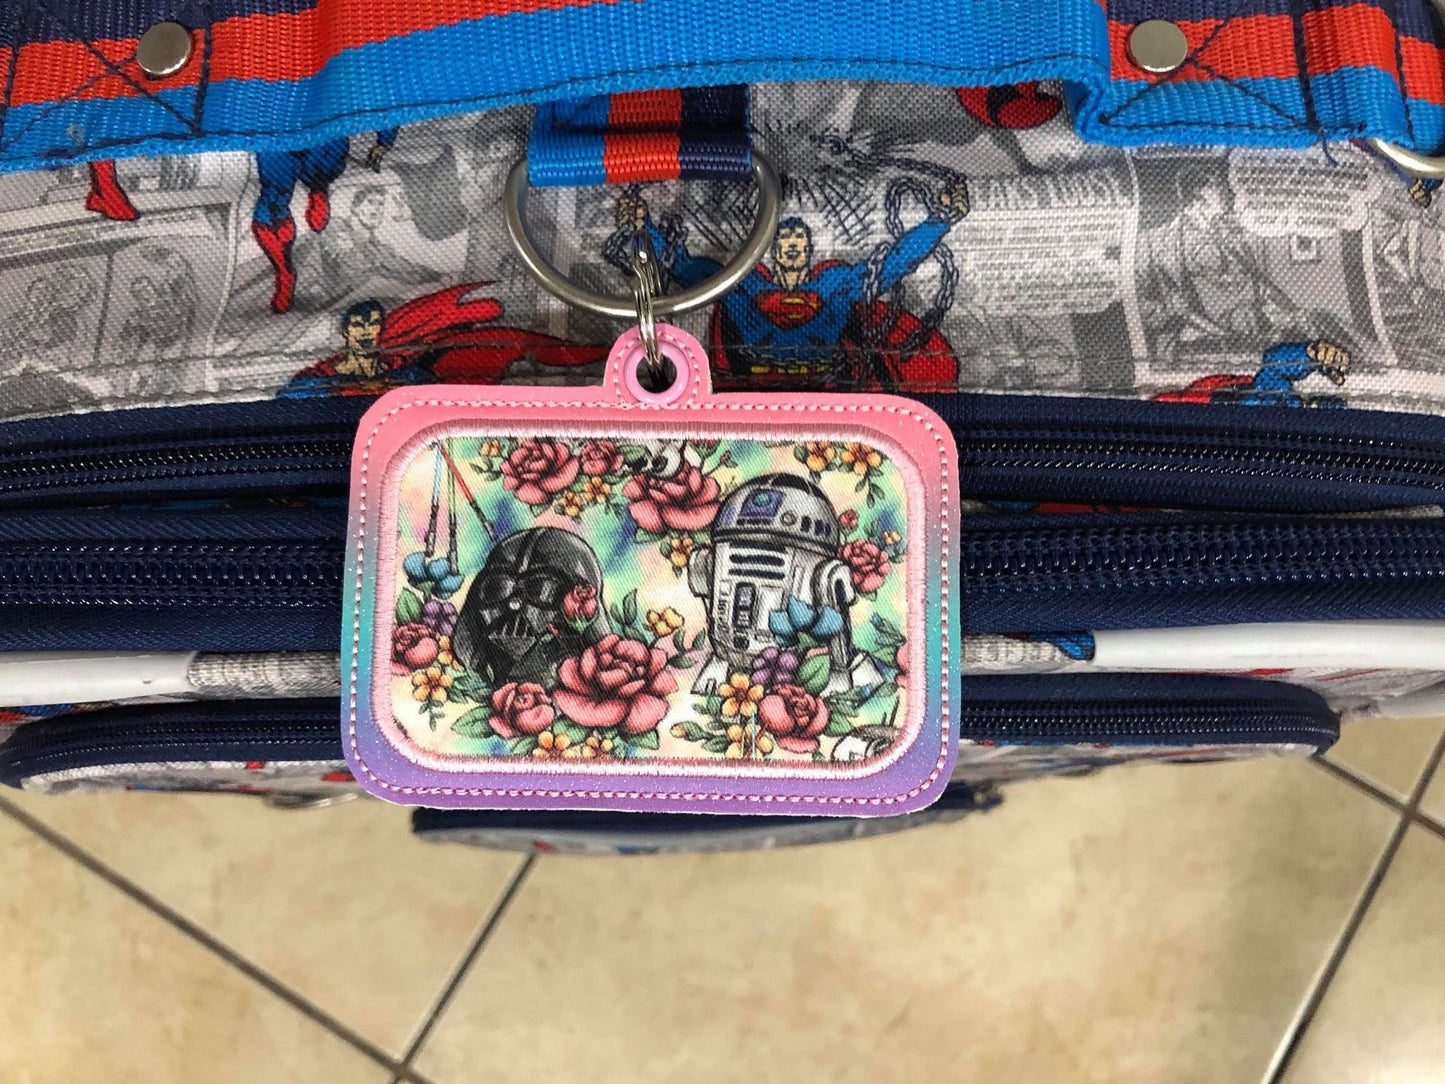 Applique ID holder/luggage tag - DIGITAL Embroidery design